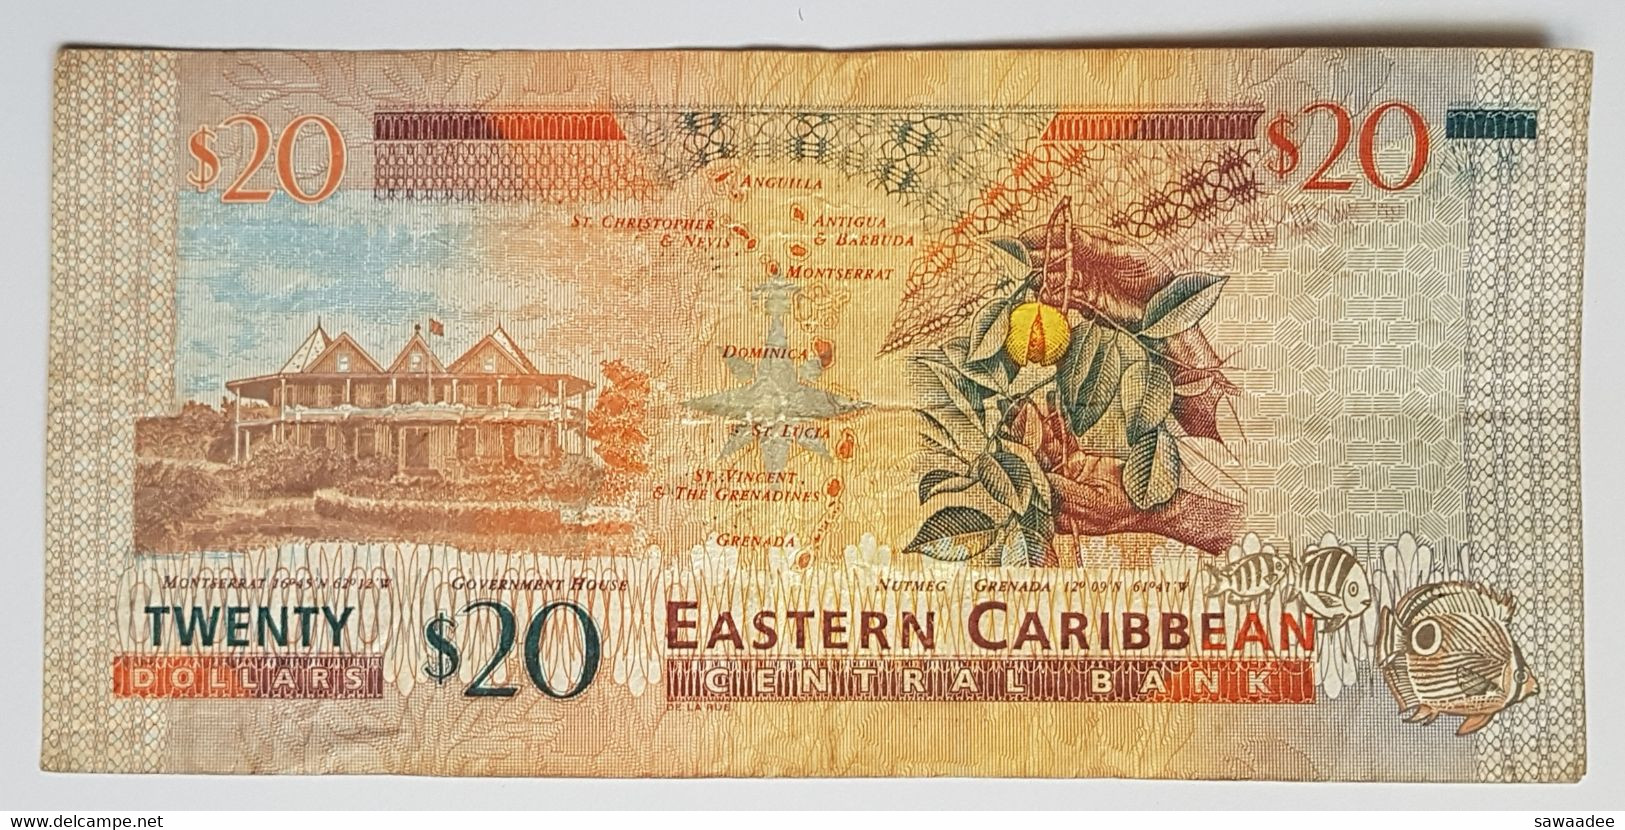 BILLET DE BANQUE - CARAÏBES ORIENTALES - ILE DE STE LUCIE - P.20 L - 20 $ - 1993 - ELISABETH II - TORTUE - FRUIT - Oostelijke Caraïben